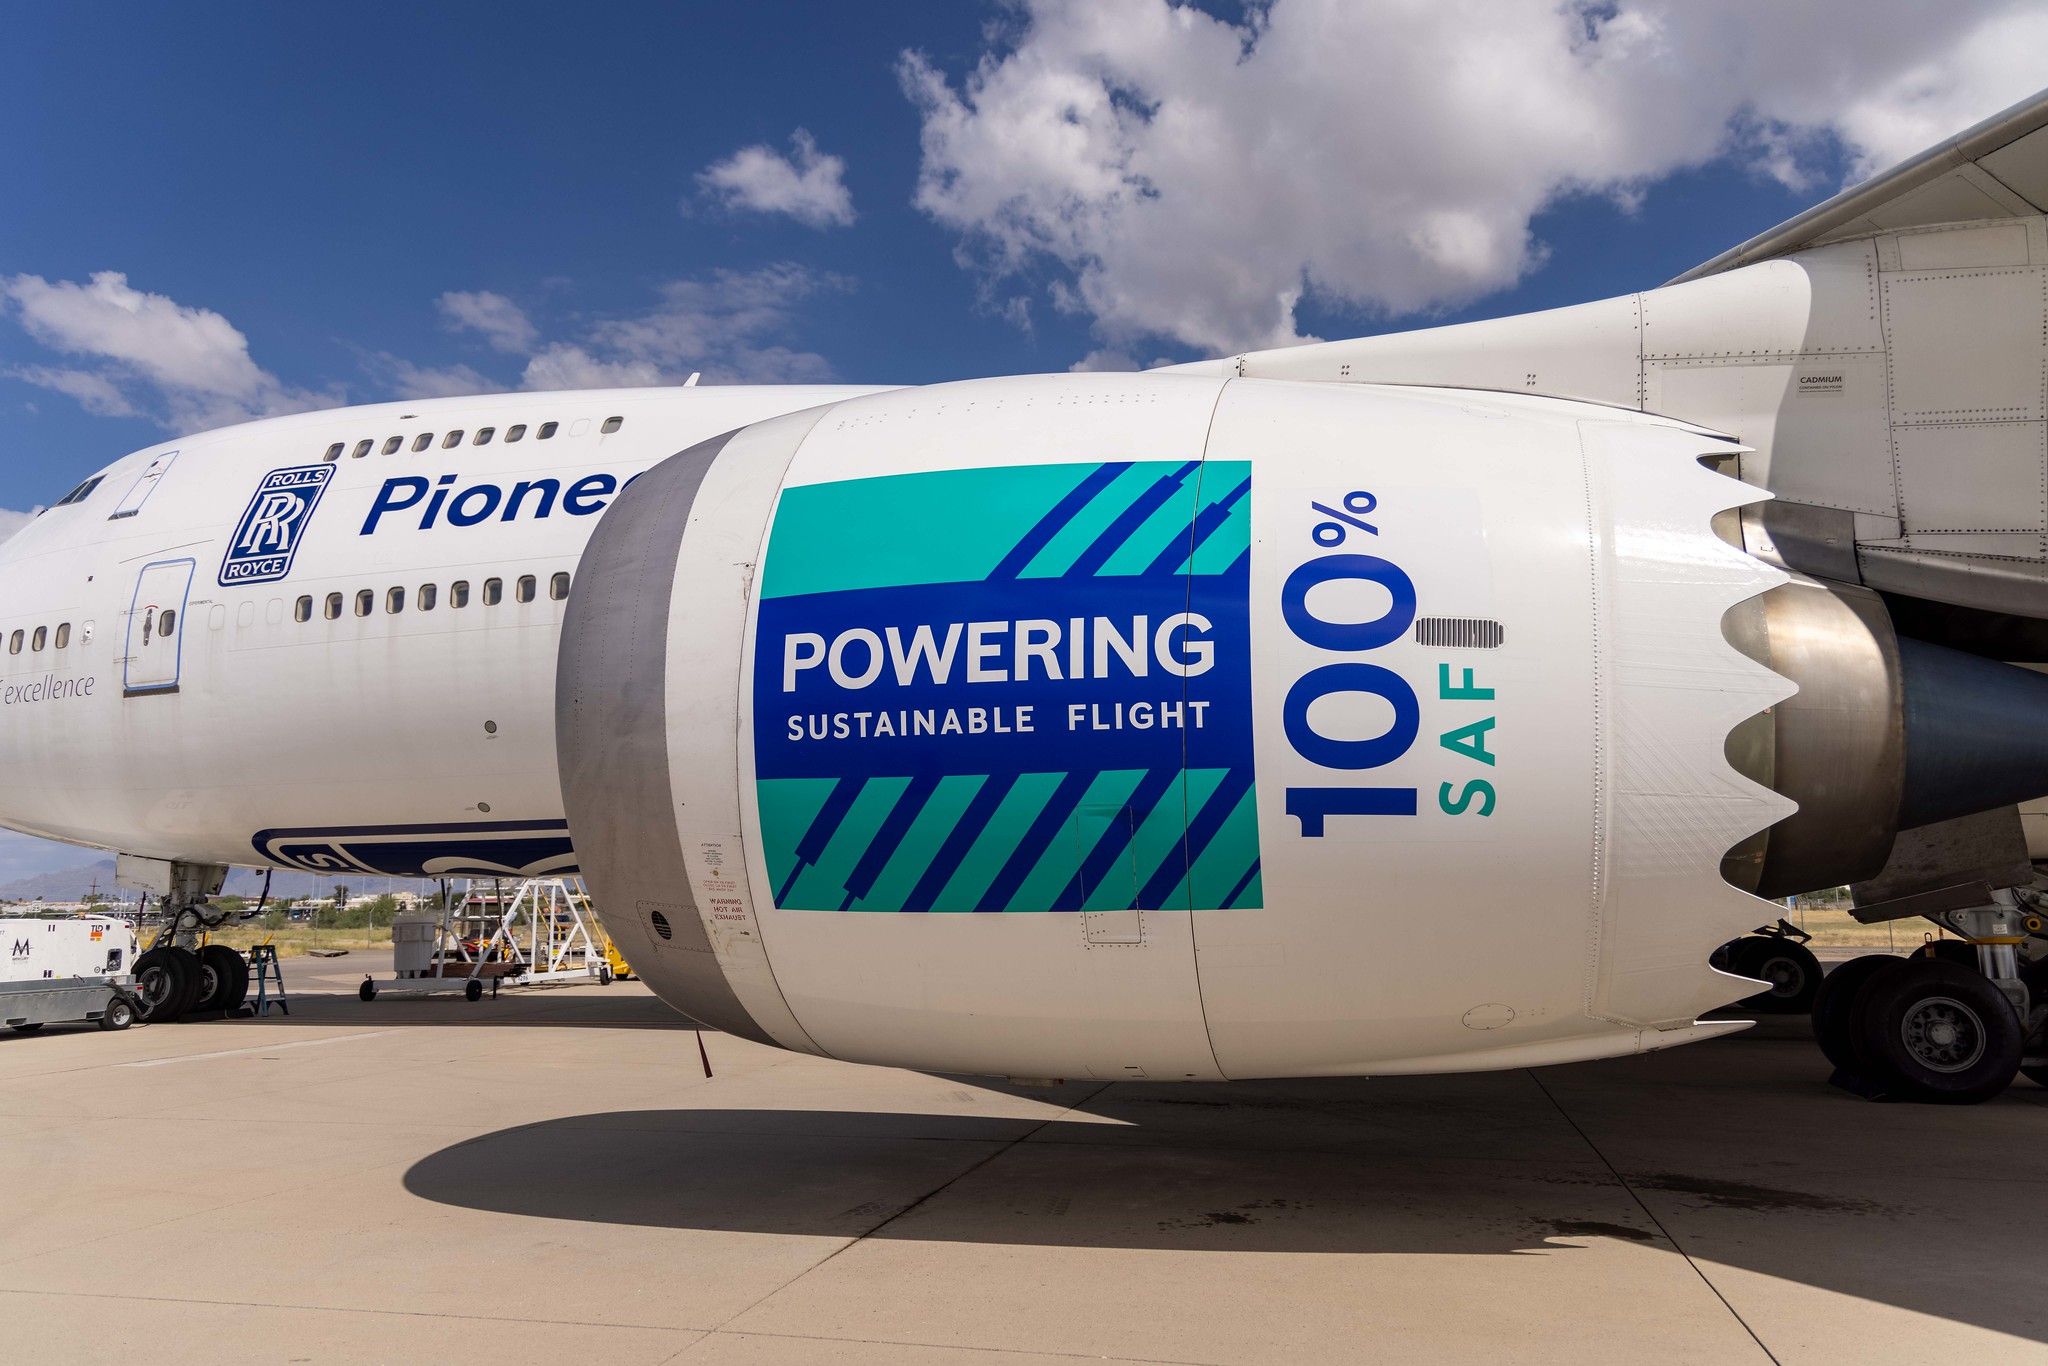 Rolls-Royce engine on 747 with sticker 